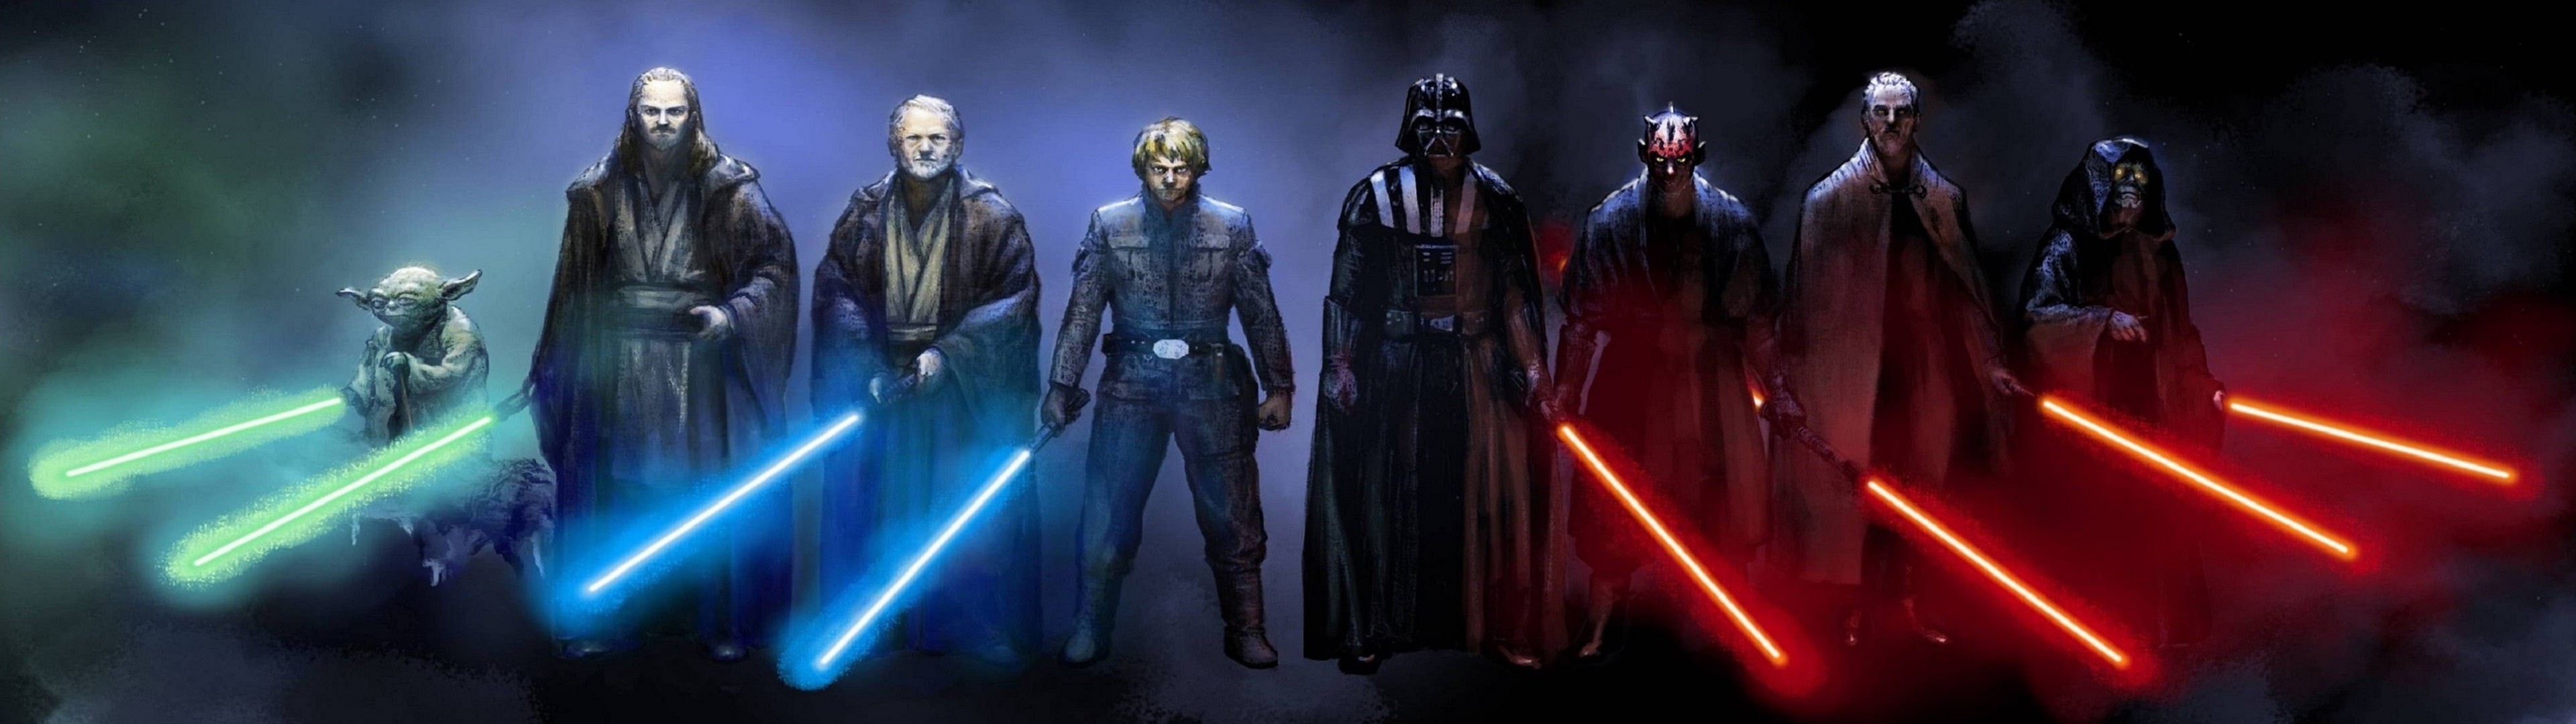 multiple Display, Star Wars, Darth Vader, Yoda, Obi Wan Kenobi, Luke Skywalker, Emperor Palpatine Wallpaper